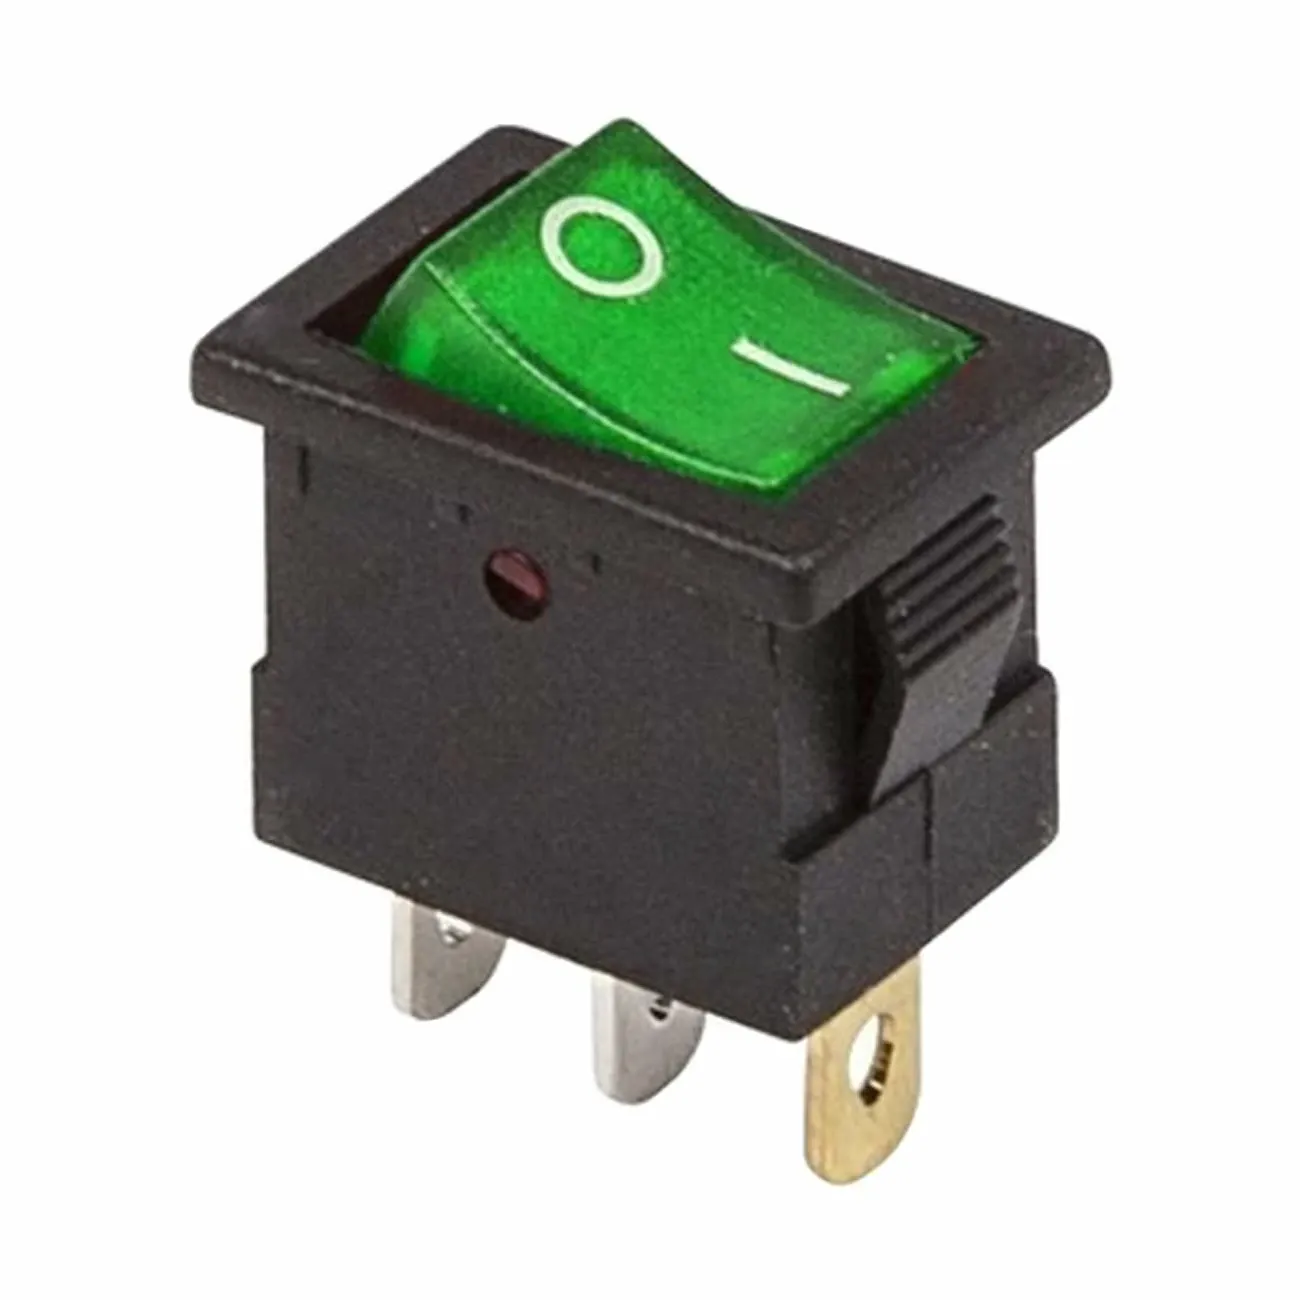 12v 15a. Выключатель клавишный 12v 15а (3с) on-off зеленый с подсветкой Mini Rexant. Выключатель клавишный 12v 15а (3с) on-off красный с подсветкой Mini Rexant. Переключатель клавишный 36-2170 Rexant. Выключатель клавишный 12v 15а (3с) on-off зеленый с подсветкой Mini Rexant (10/1000).